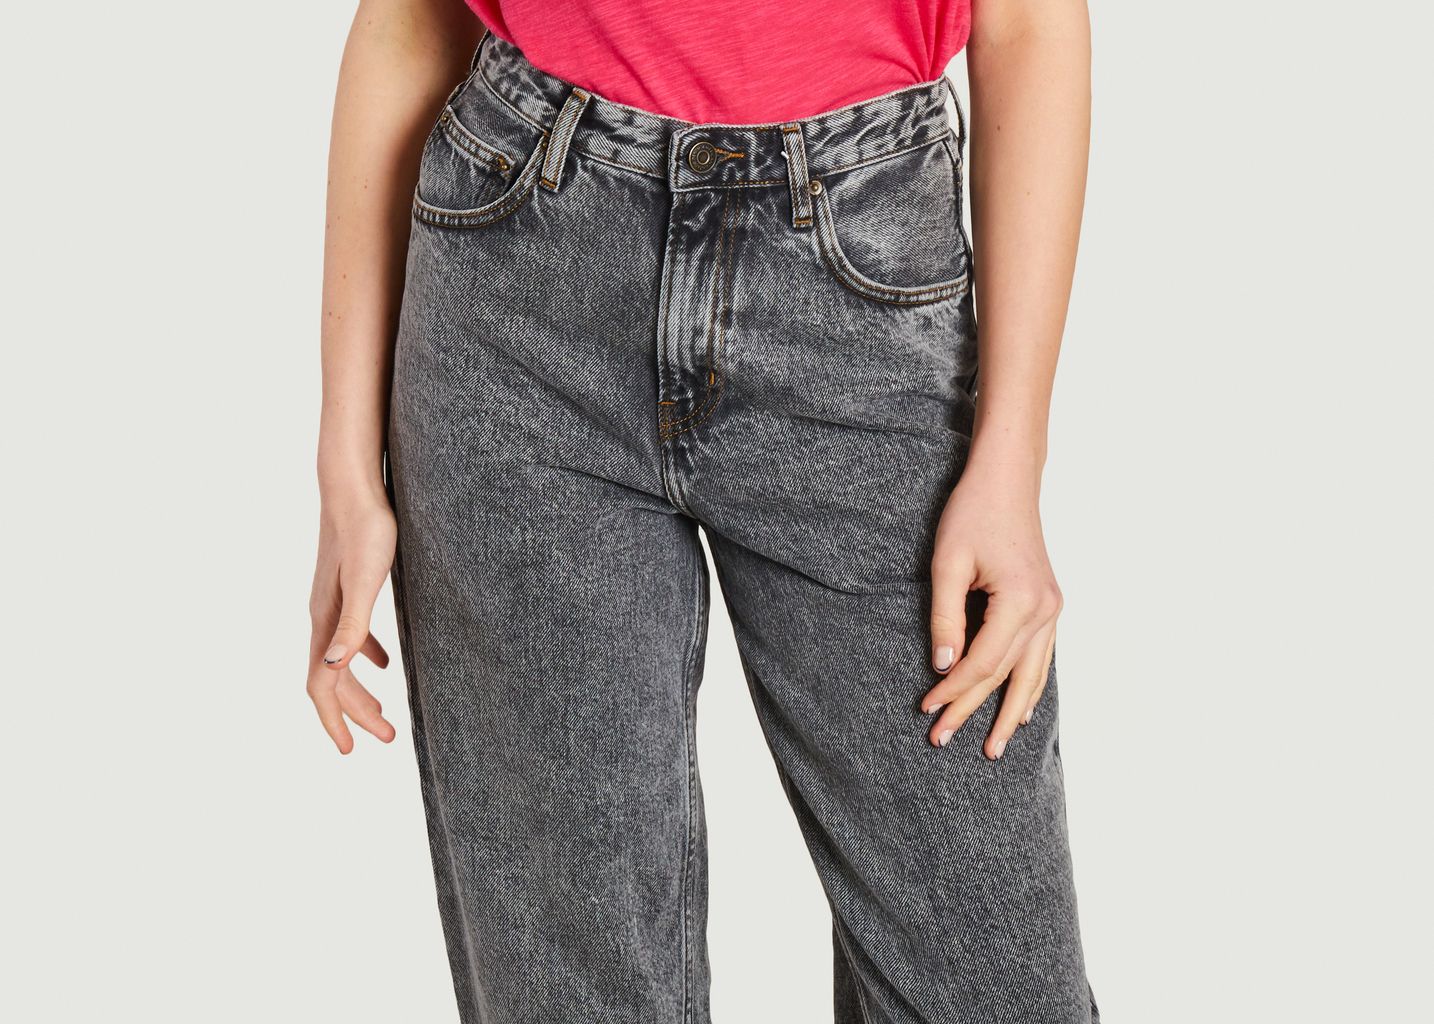 Yopday jeans - American Vintage